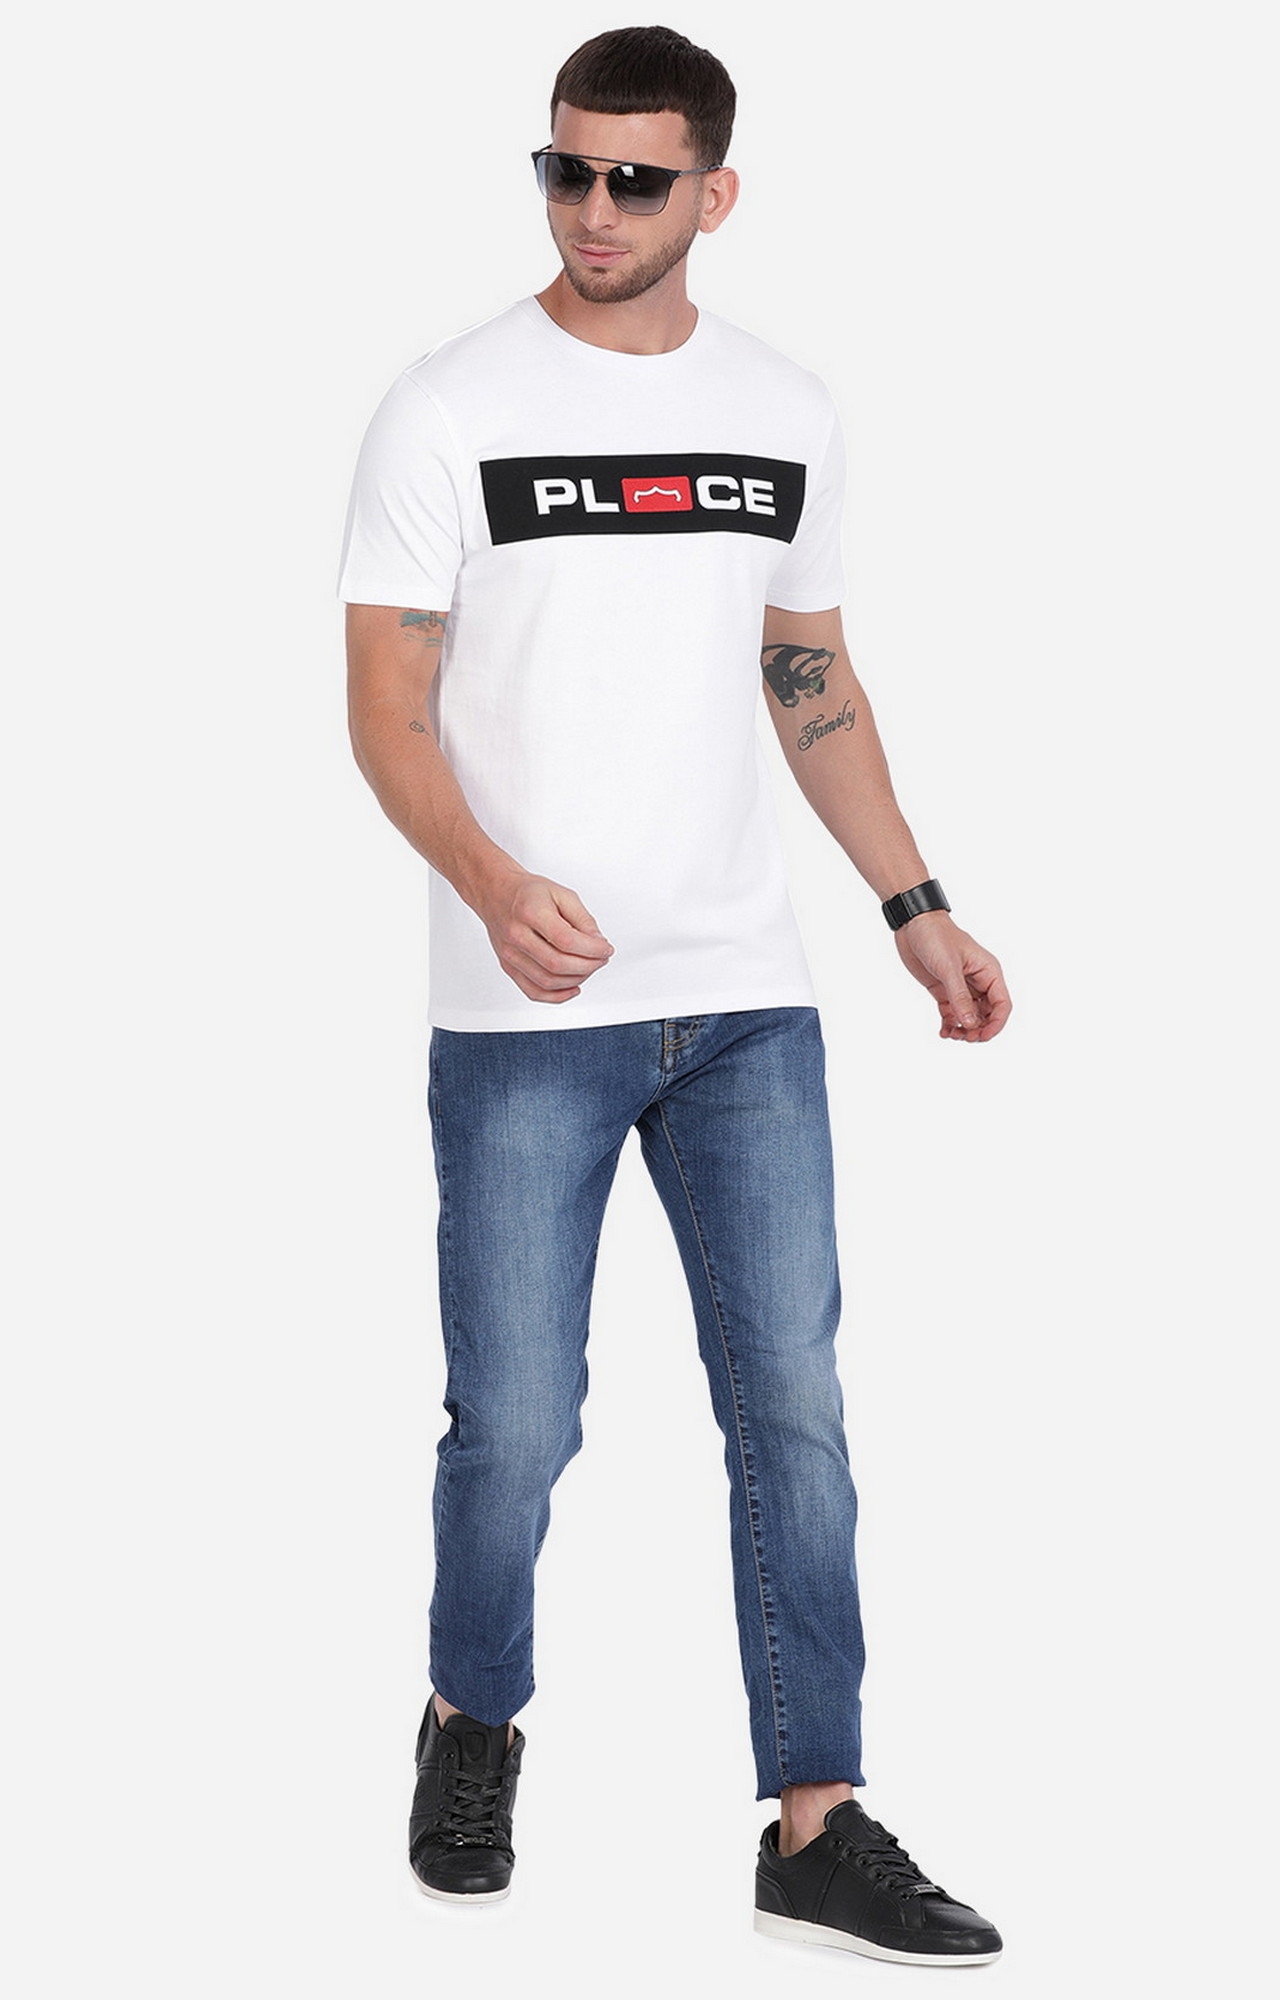 883 Police | Men's White Cotton Typographic Printed T-Shirt 1